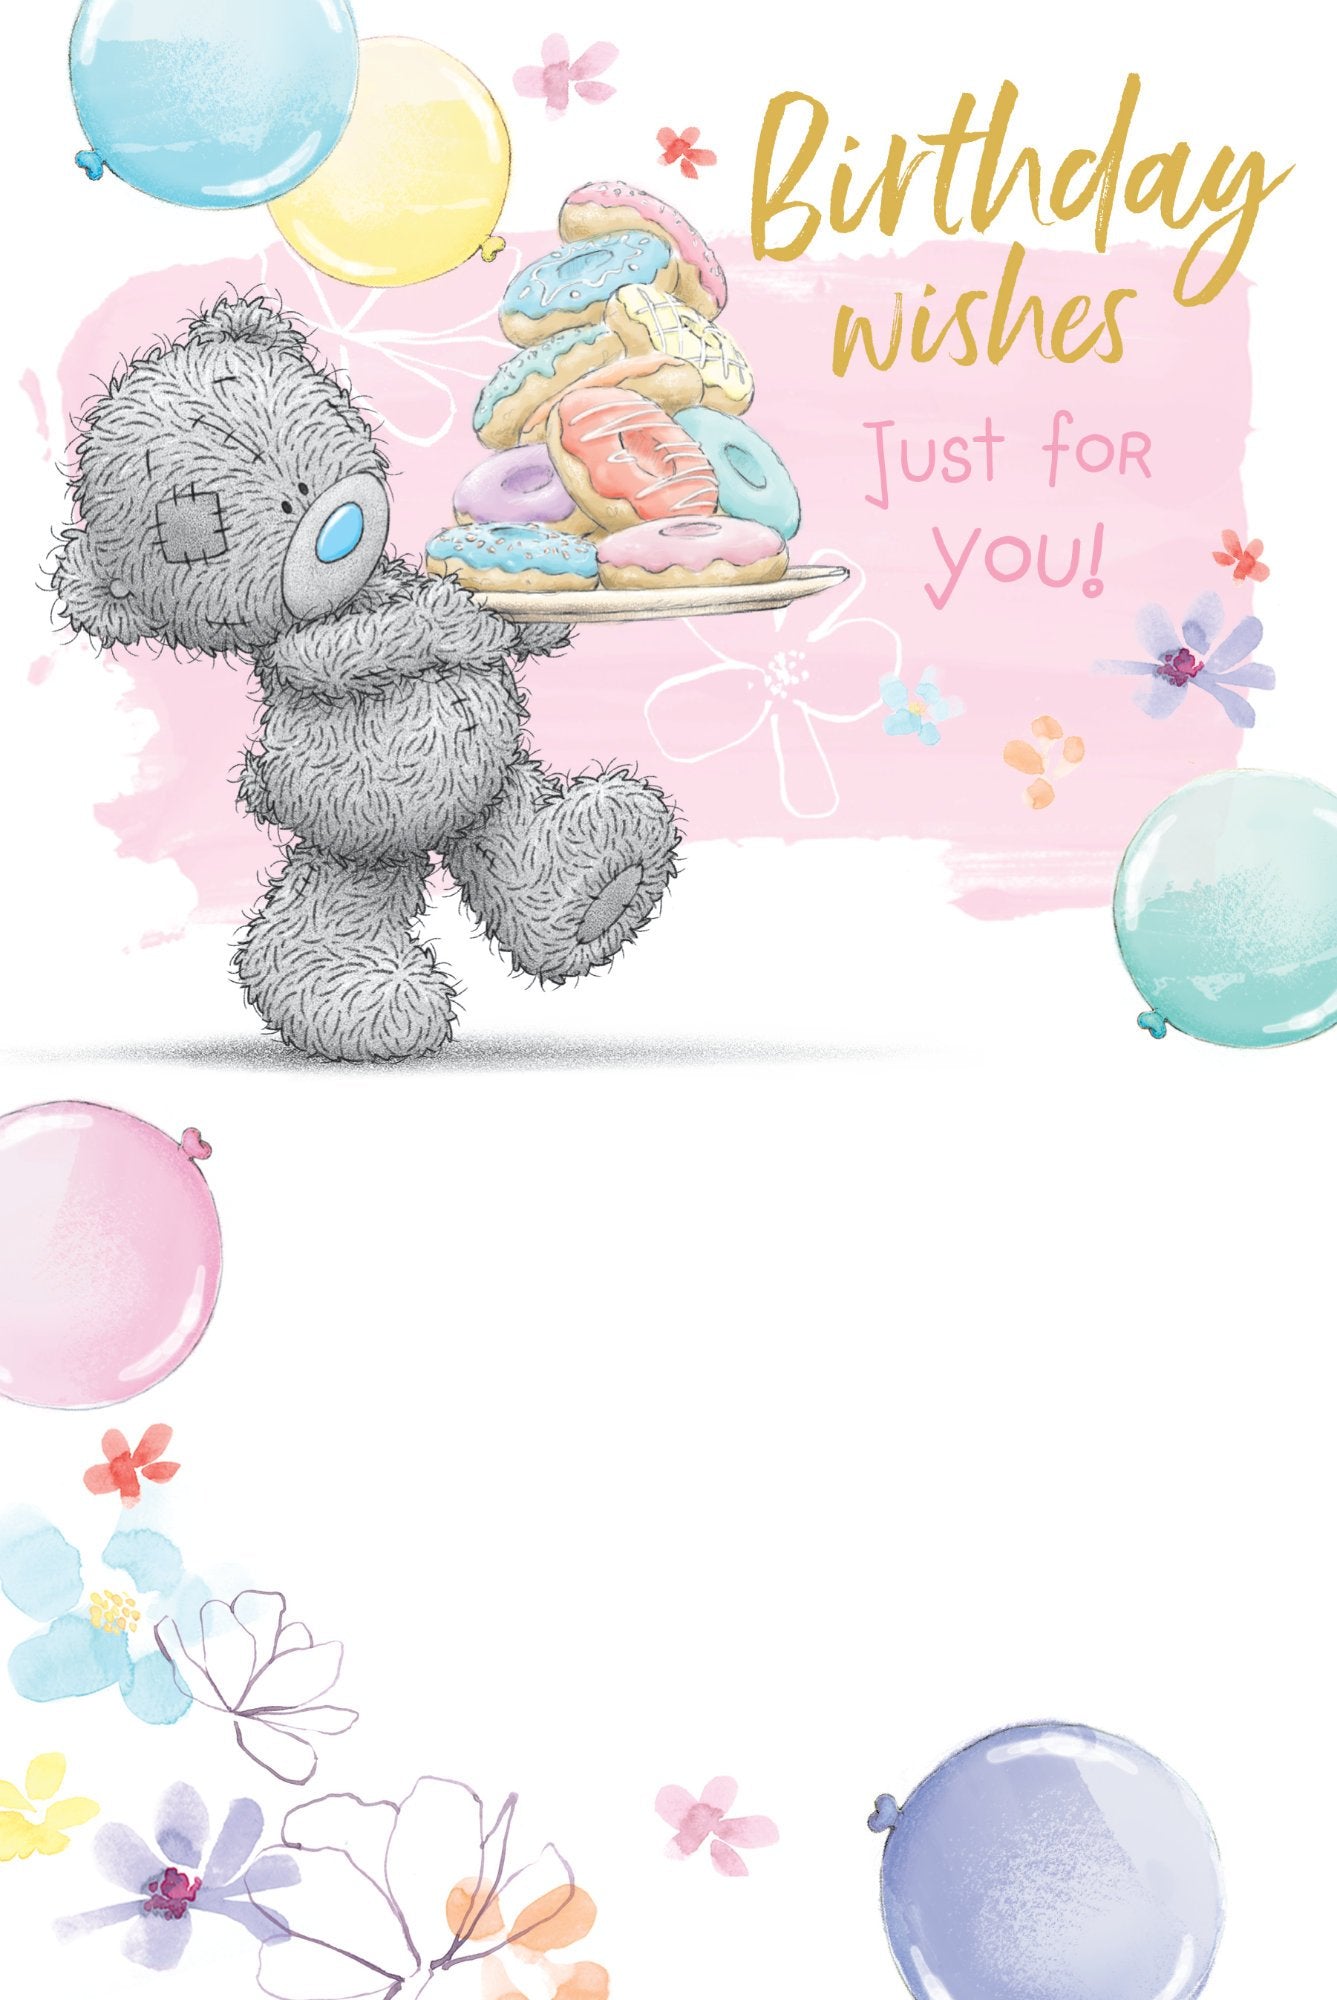 Photograph of Bear Carrying Doughnuts Greetings Card at Nicole's Shop